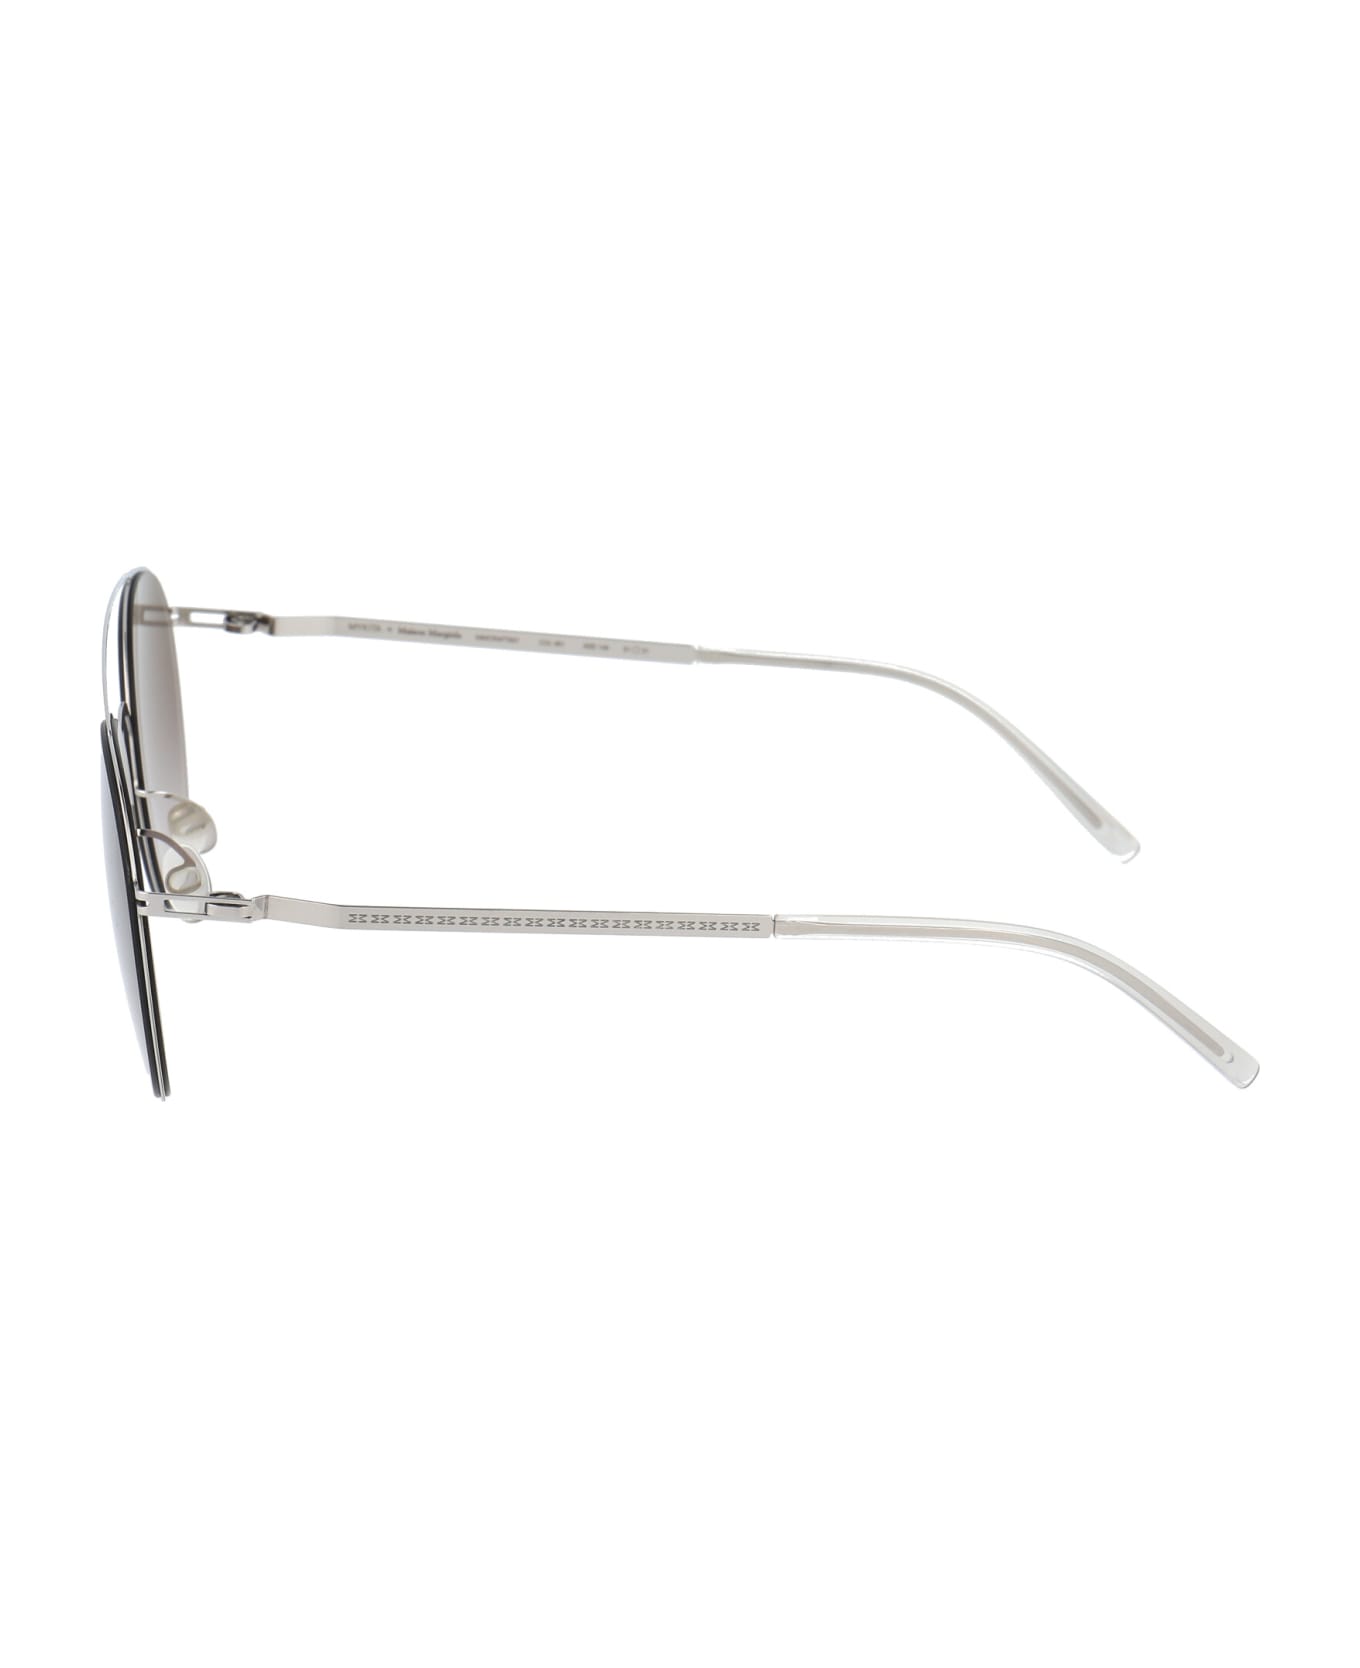 Mykita Mmcraft007 Sunglasses - 051 SHINYSILVER | GREY GRADIENT サングラス